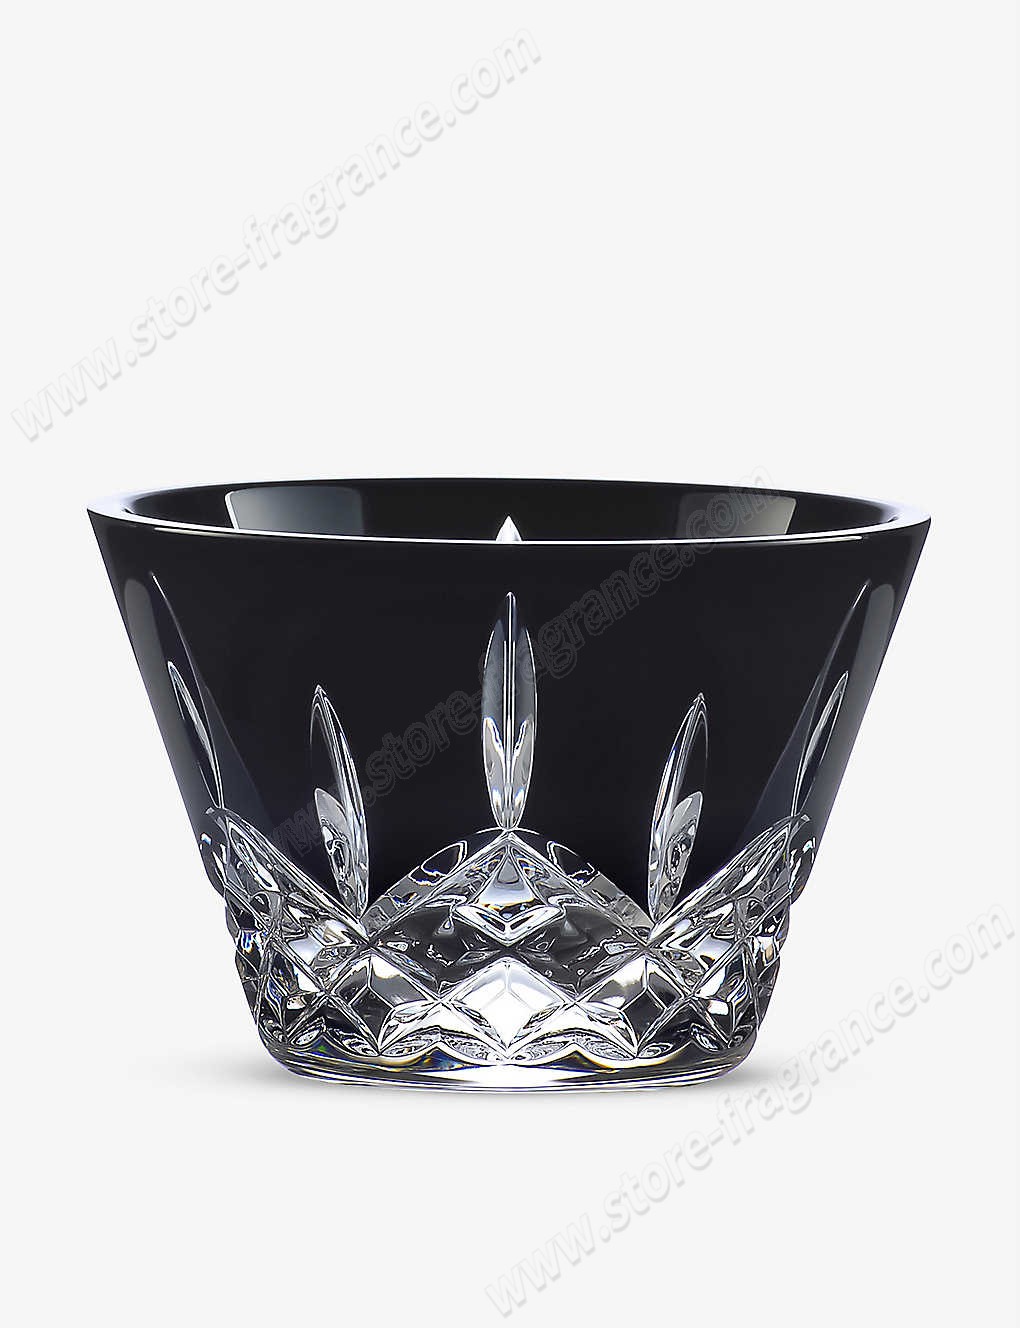 WATERFORD/Lismore Black crystal votive 6cm ✿ Discount Store - WATERFORD/Lismore Black crystal votive 6cm ✿ Discount Store